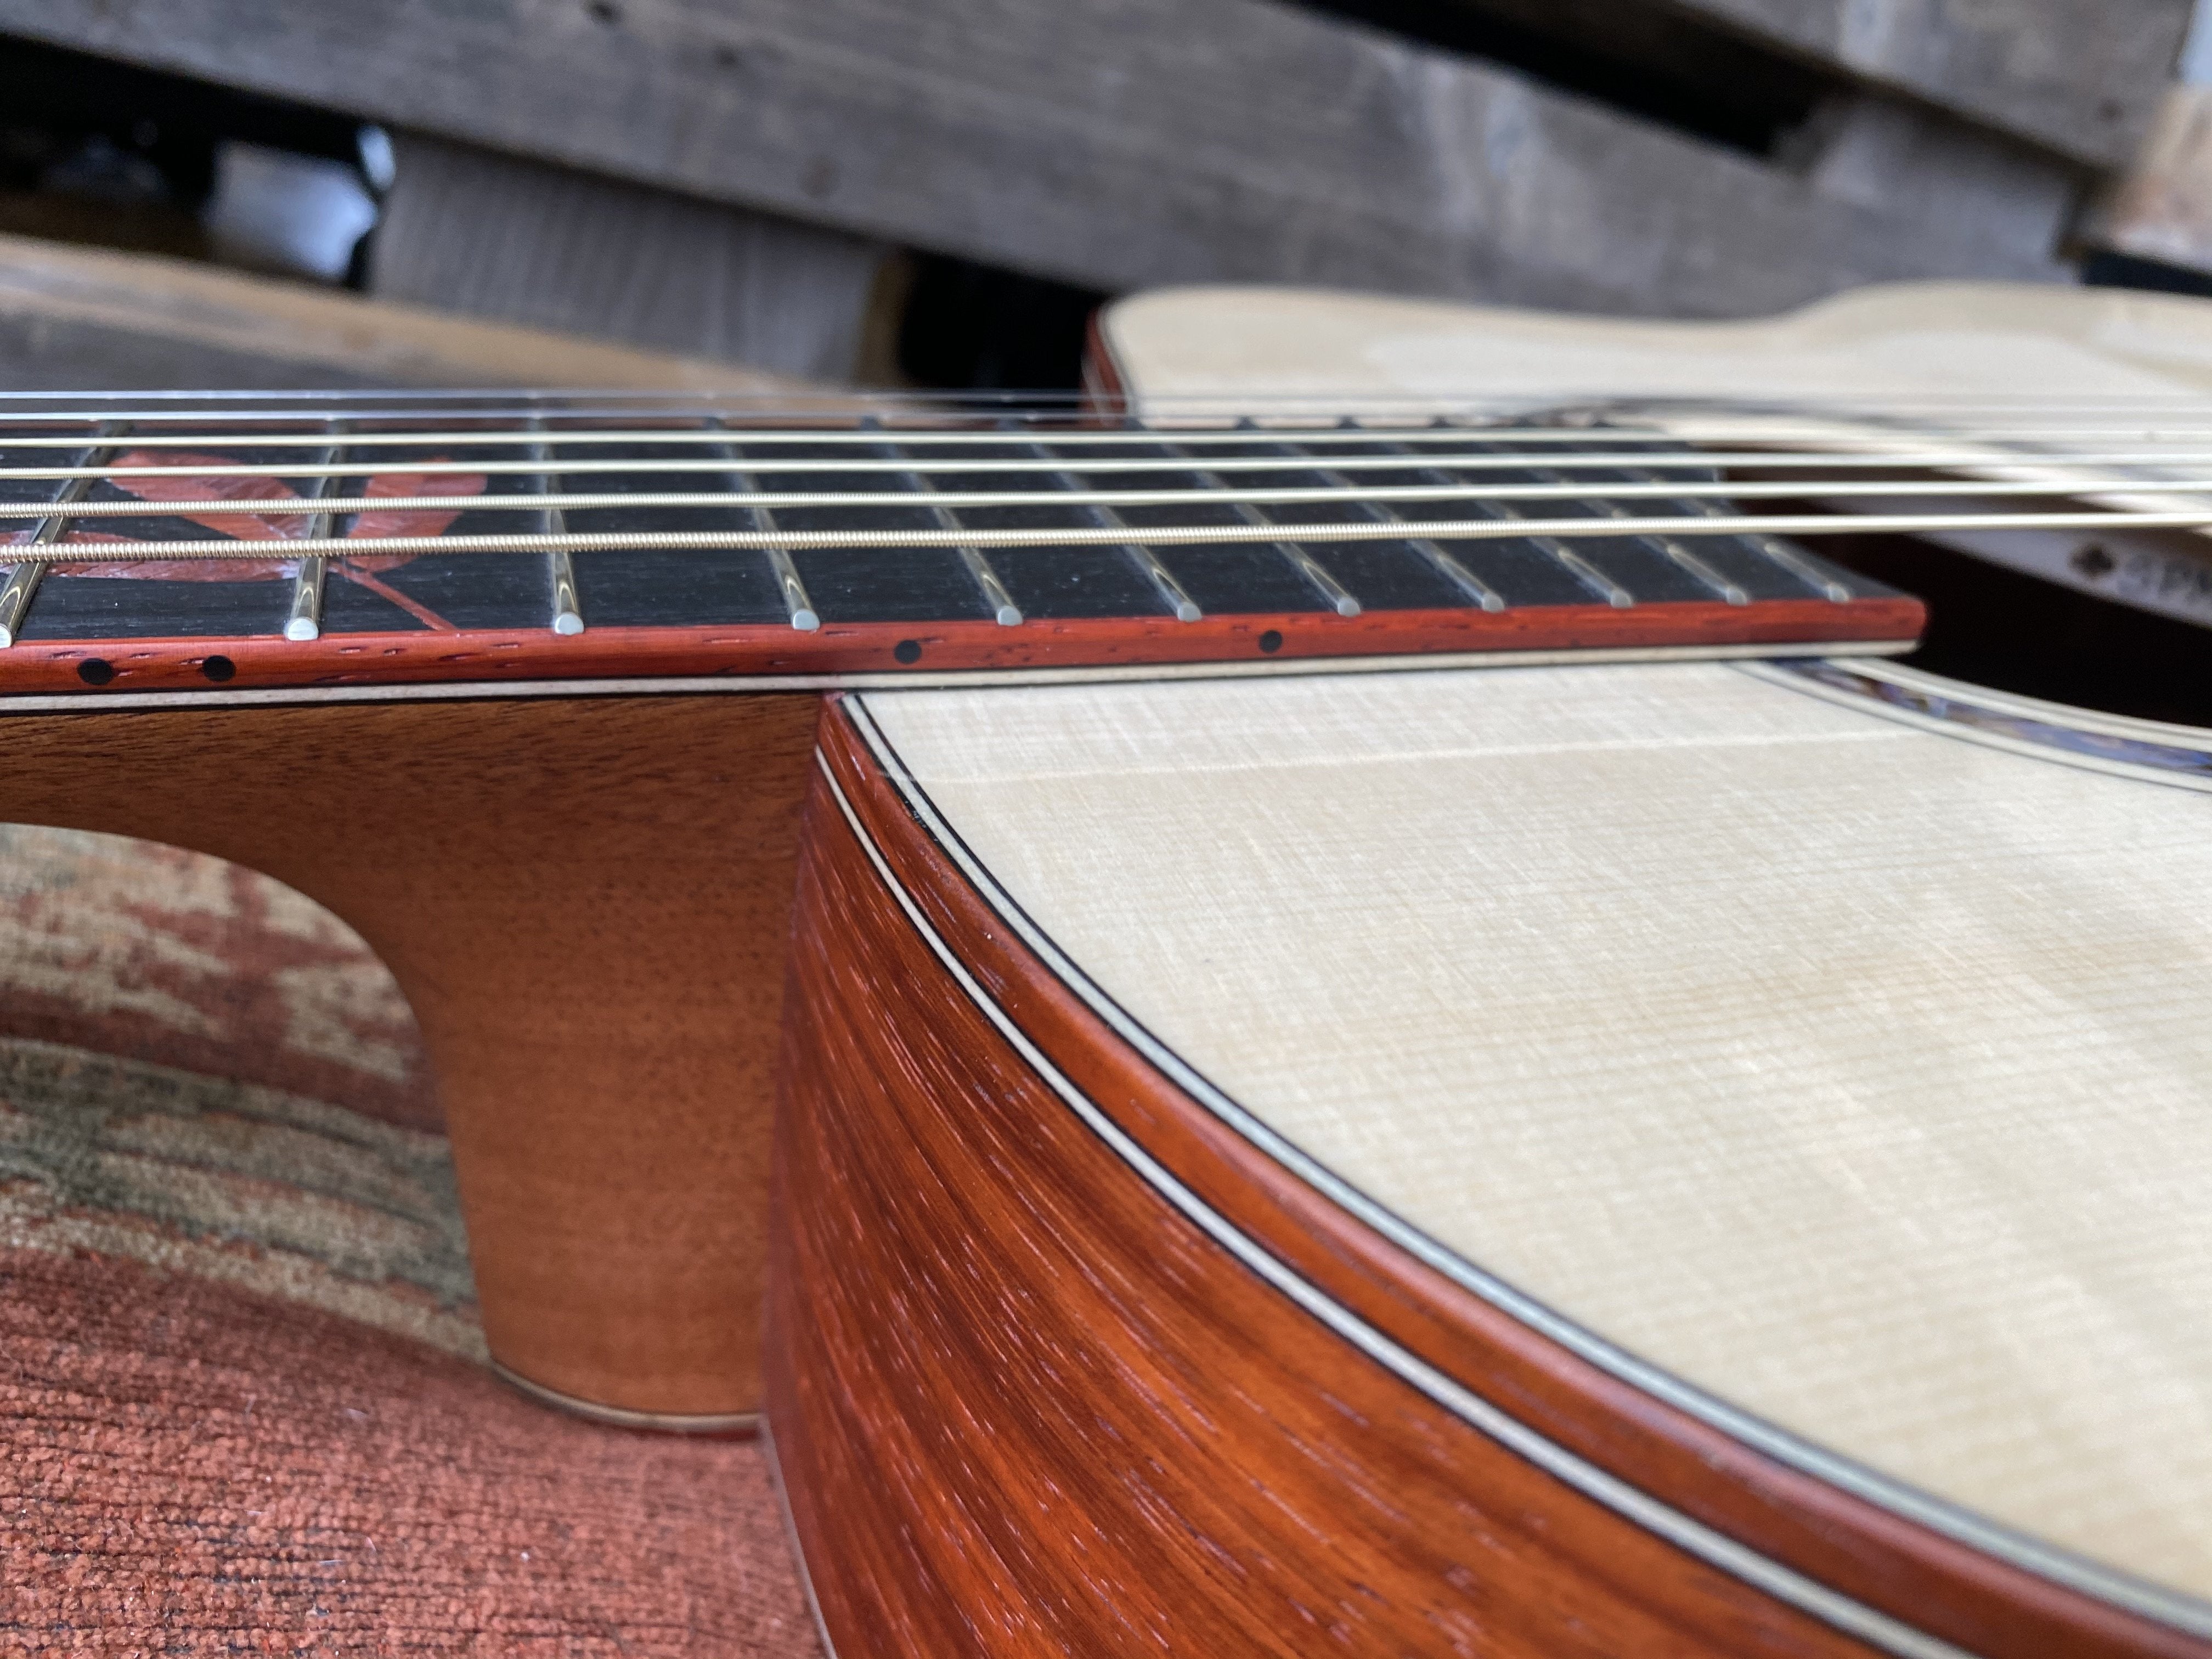 Dowina PADAUK GAC SWS (Swiss Spruce), Acoustic Guitar for sale at Richards Guitars.